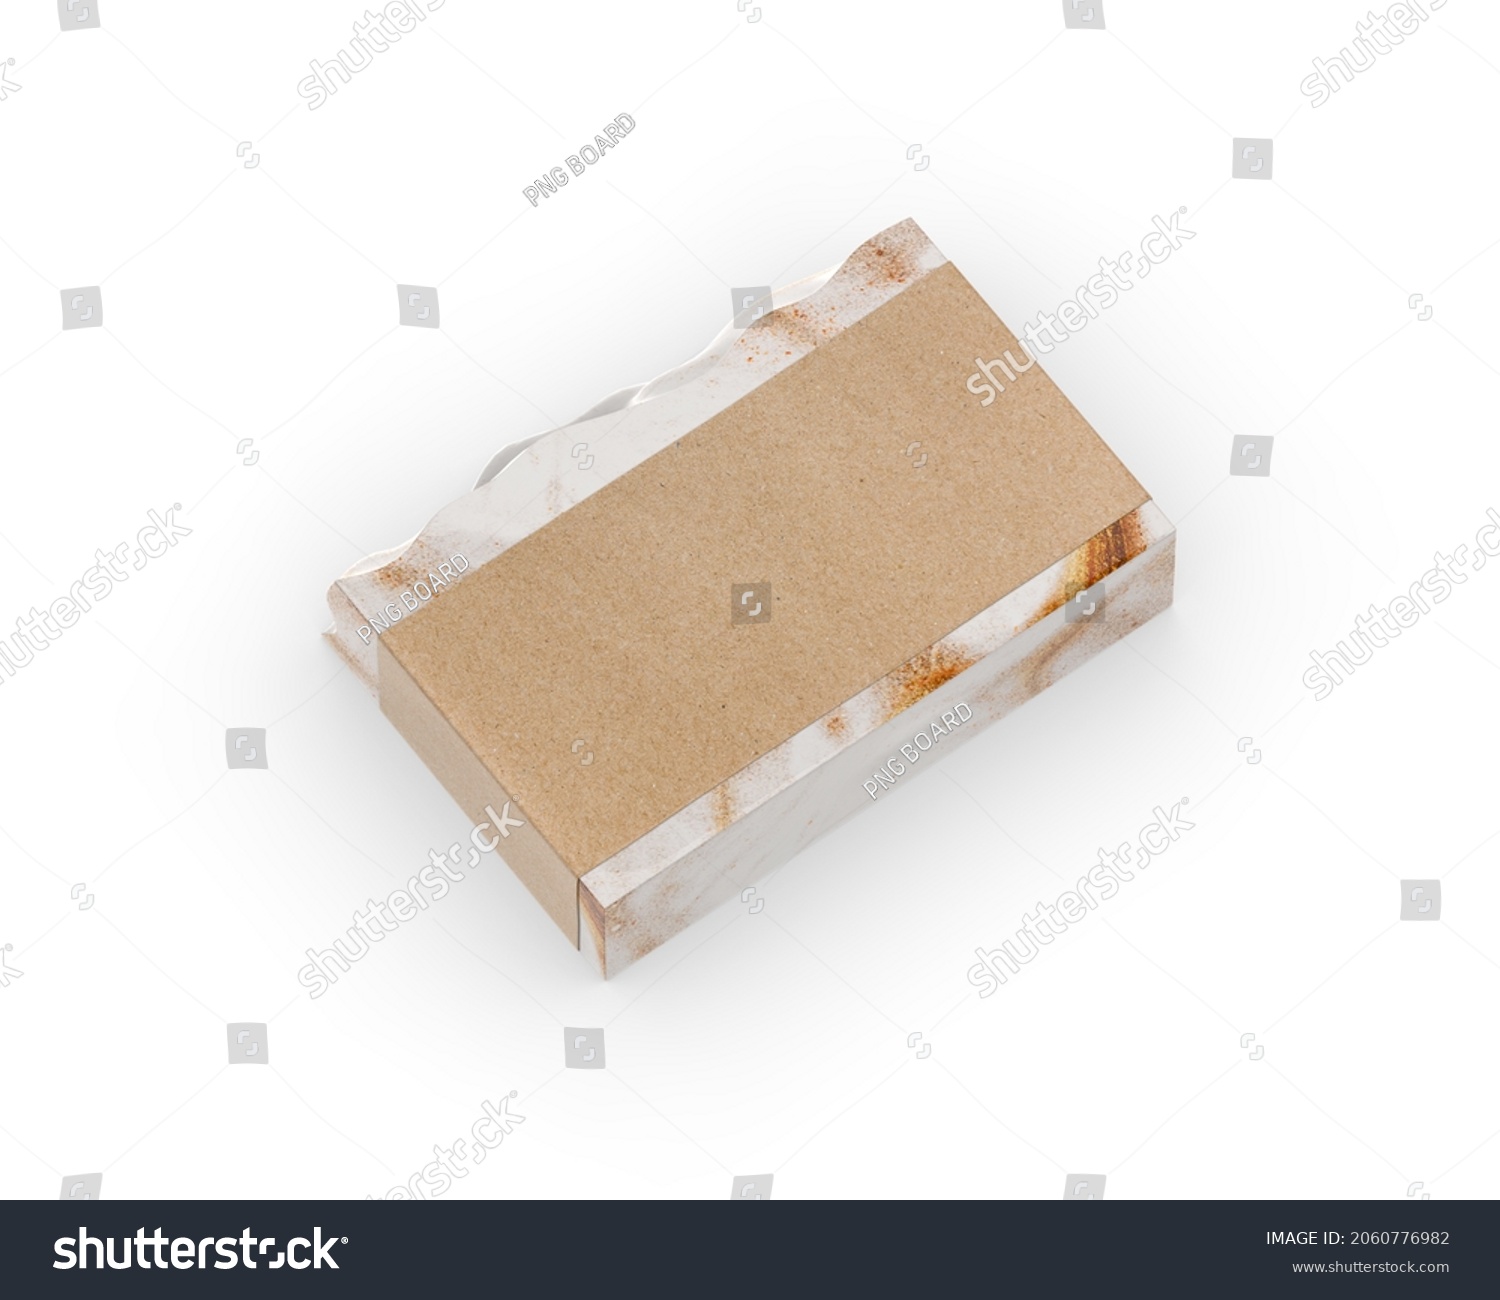 Paper soap mockup Images, Stock Photos & Vectors | Shutterstock